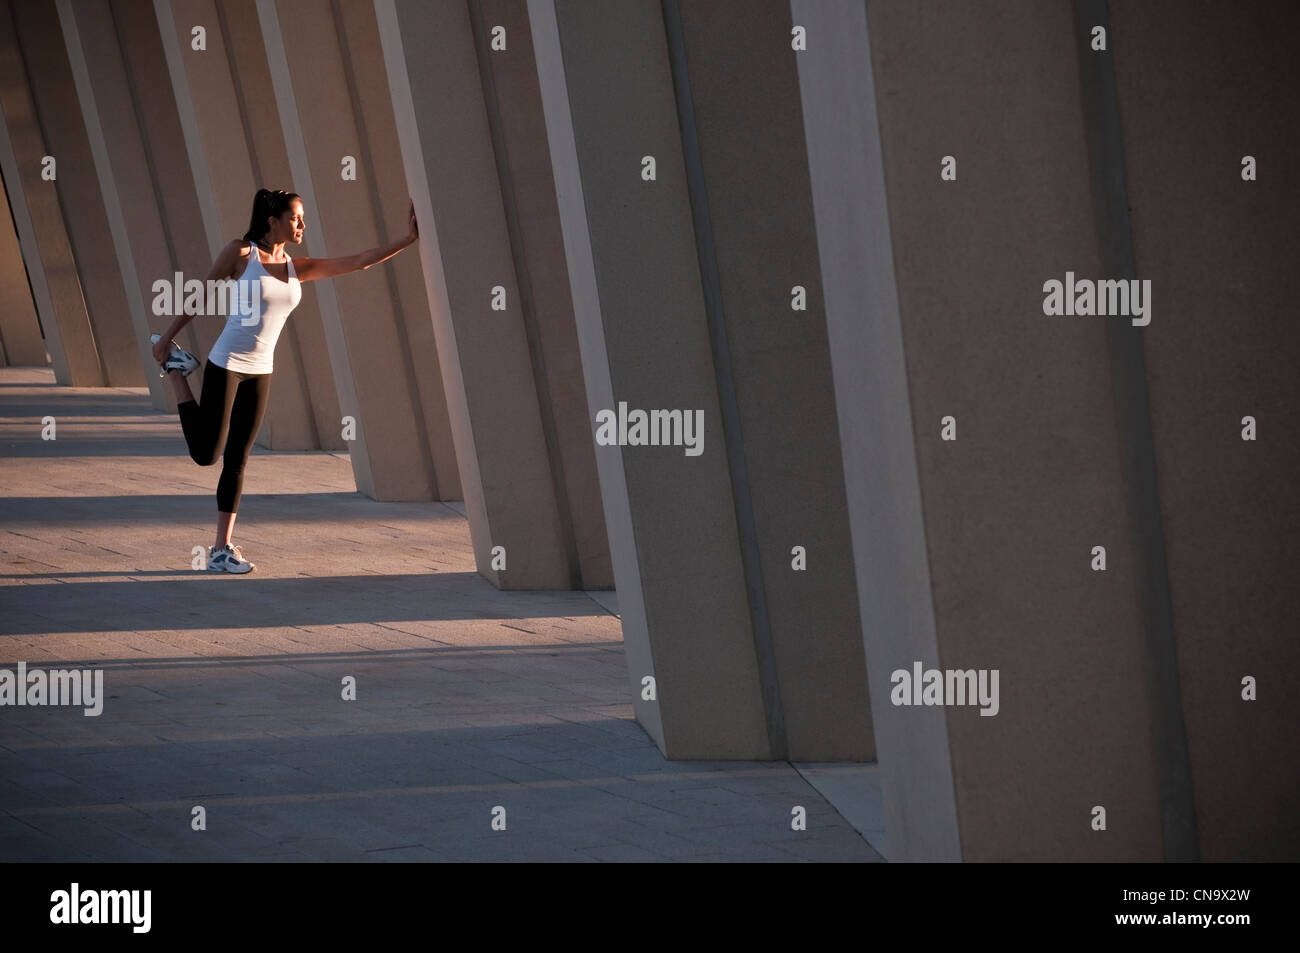 Runner stretching on concrete pillar Stock Photo